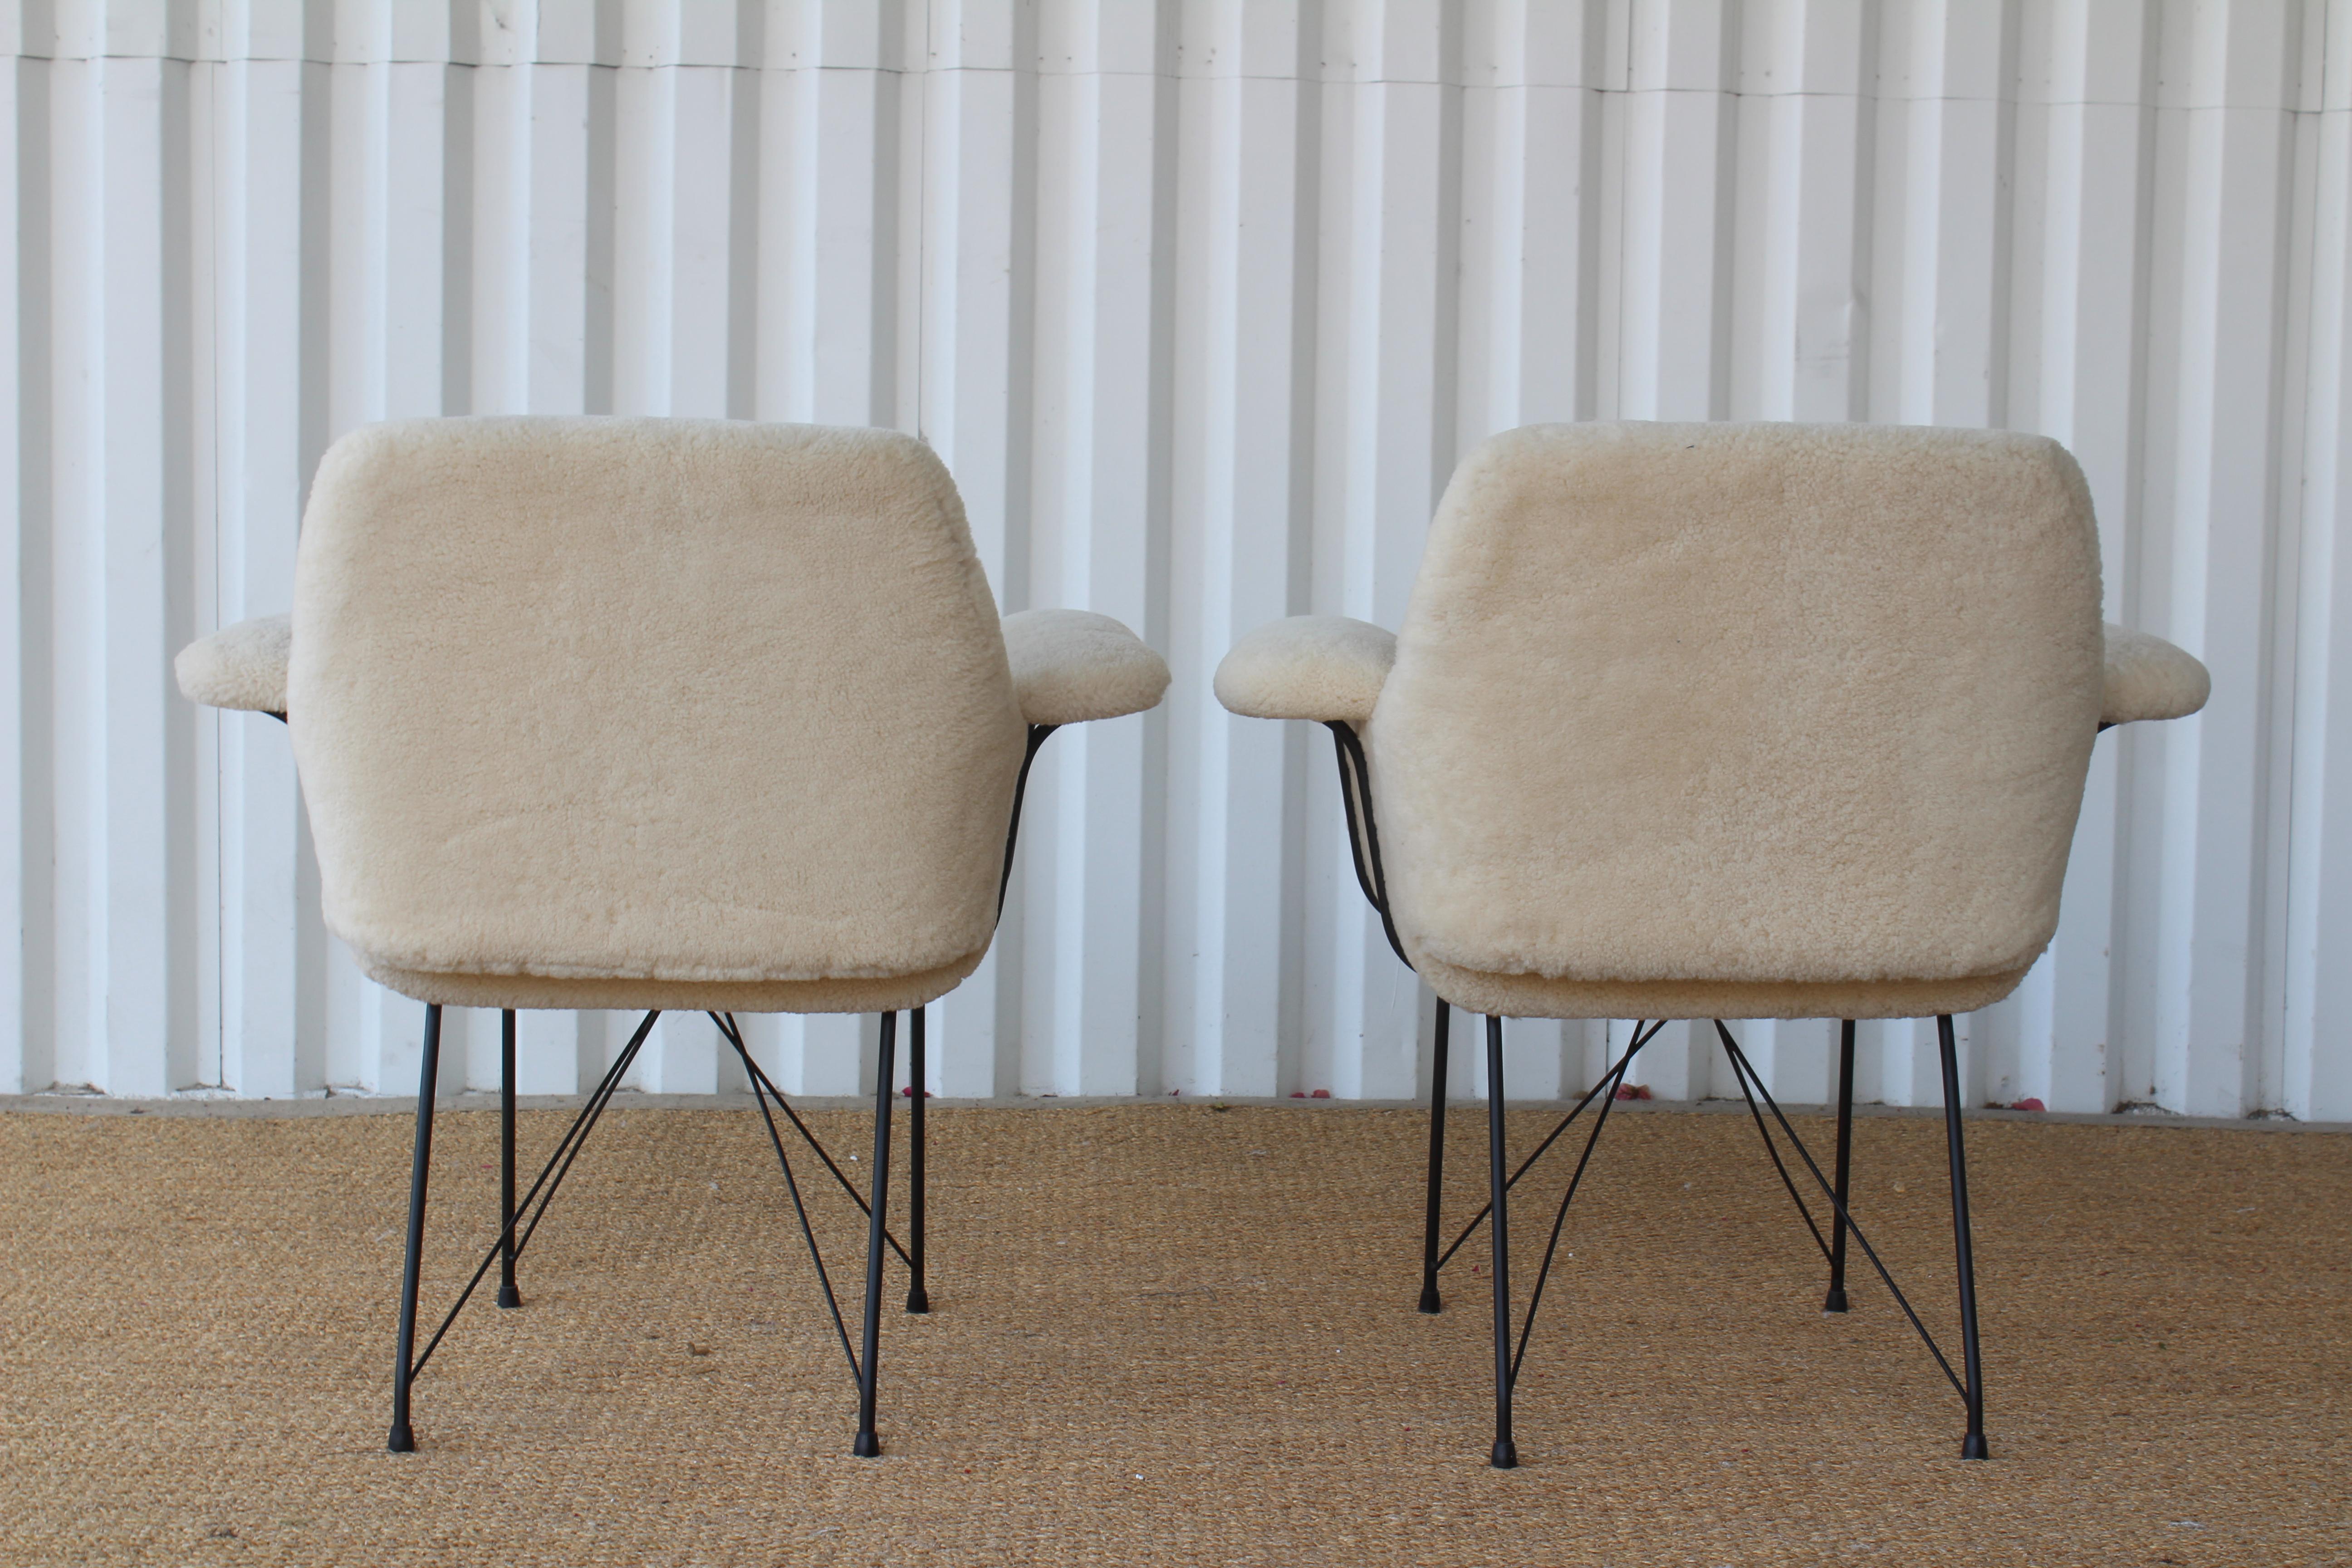 Mid-20th Century Pair of Brazilian Modern Chairs by Carlo Hauner and Martin Eisler, 1955